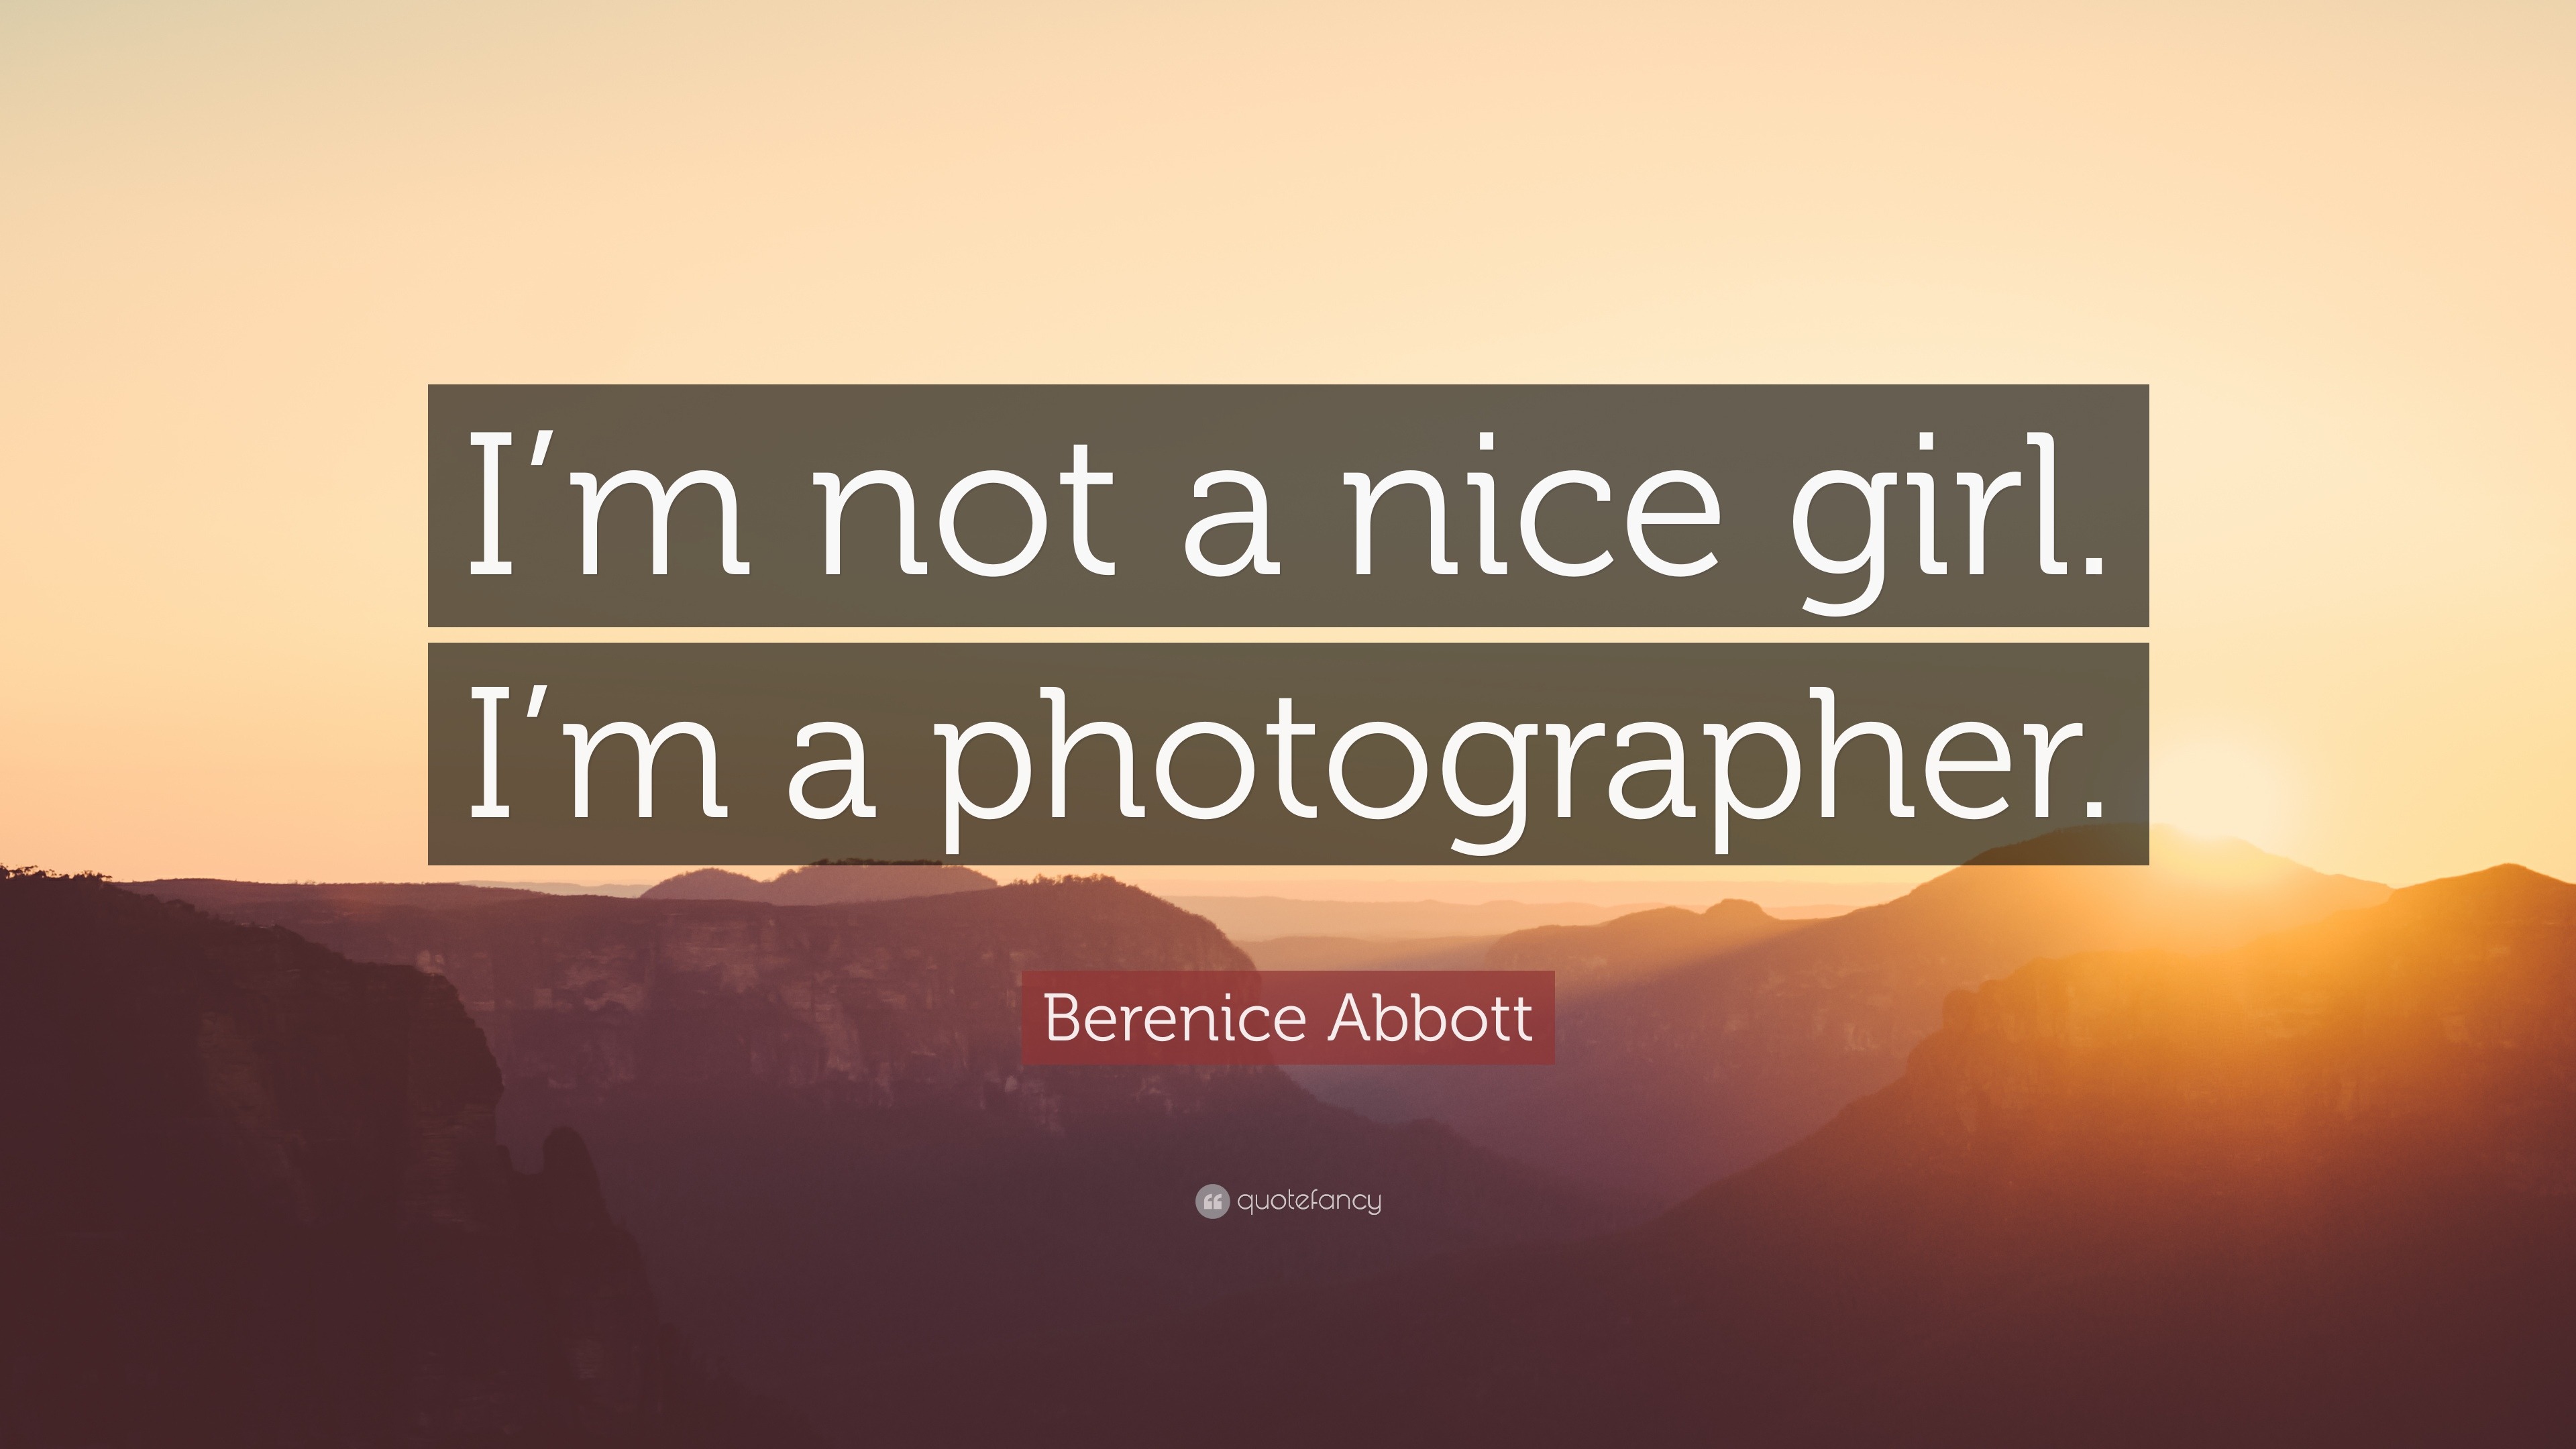 Berenice Abbott Quote “I m not a nice girl I m